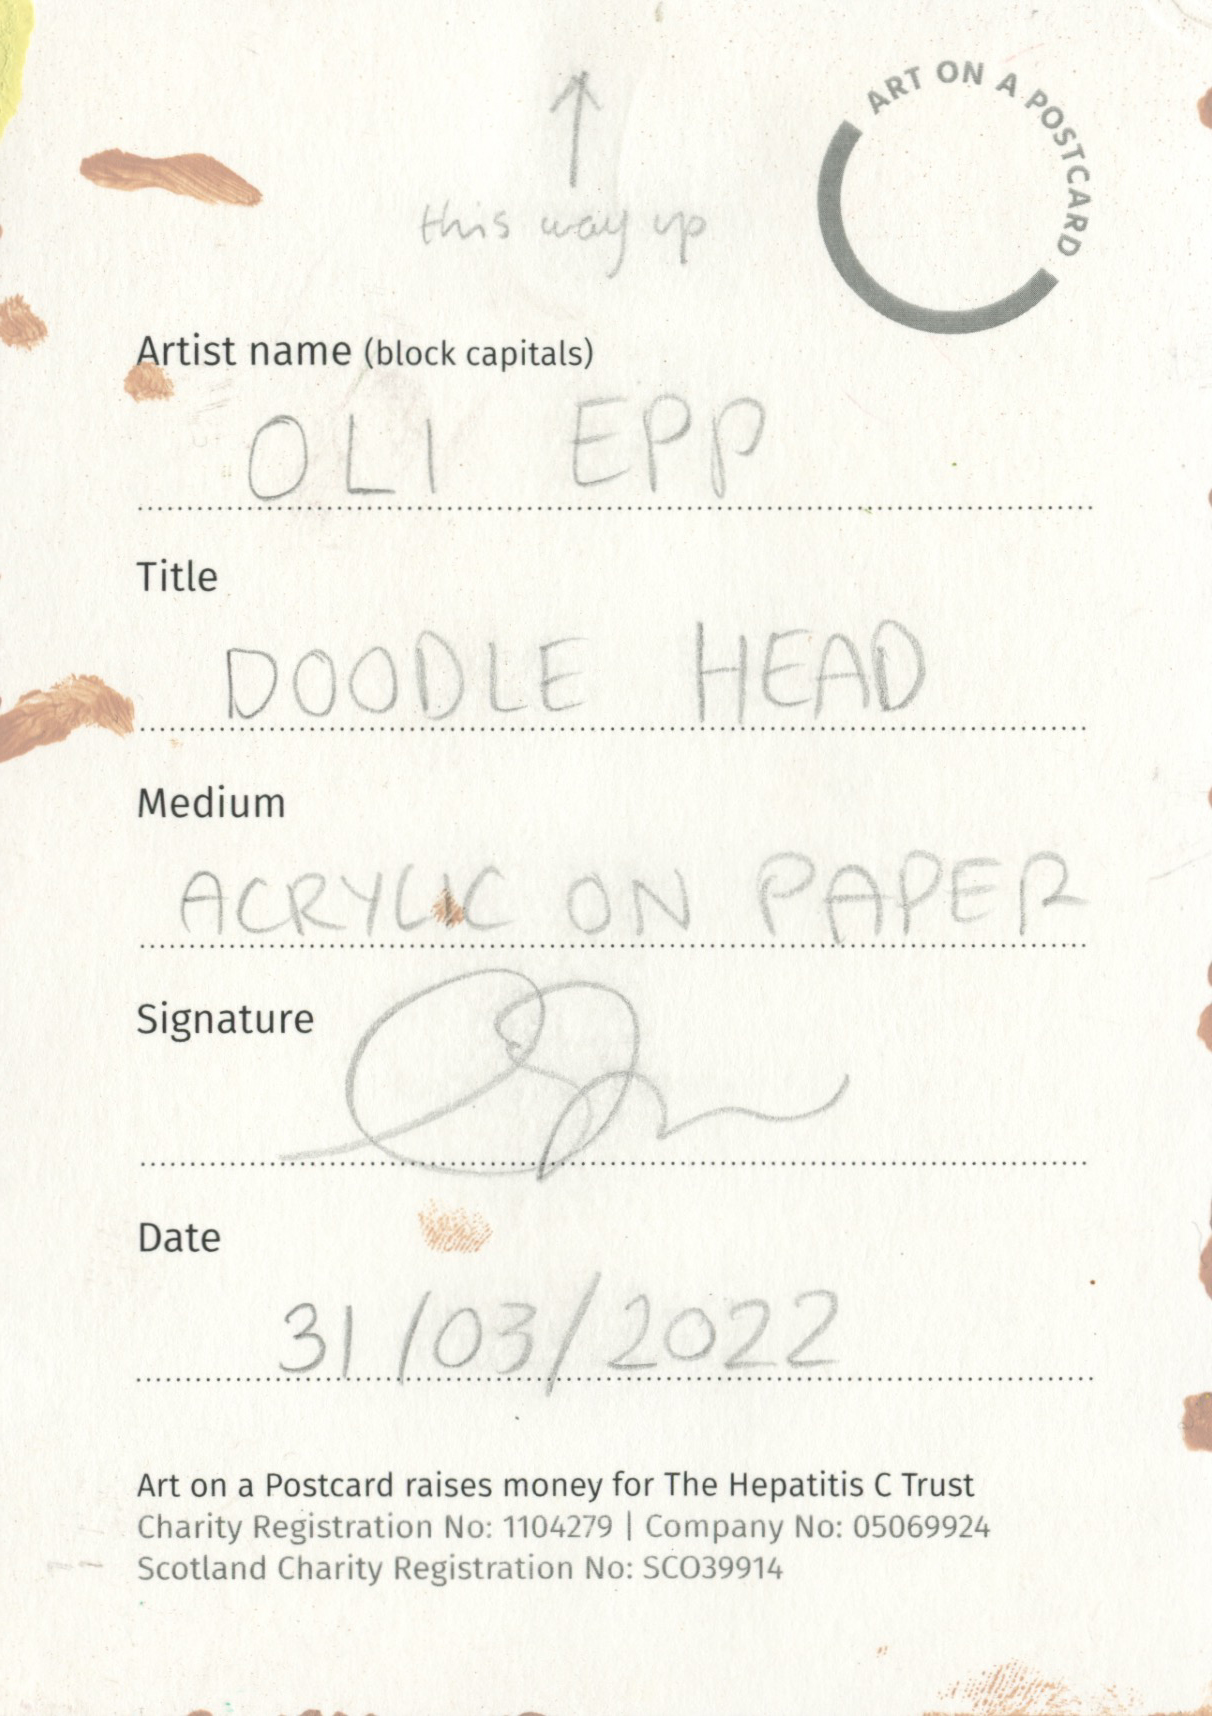 47. Oli Epp - Doodle Head - BACK